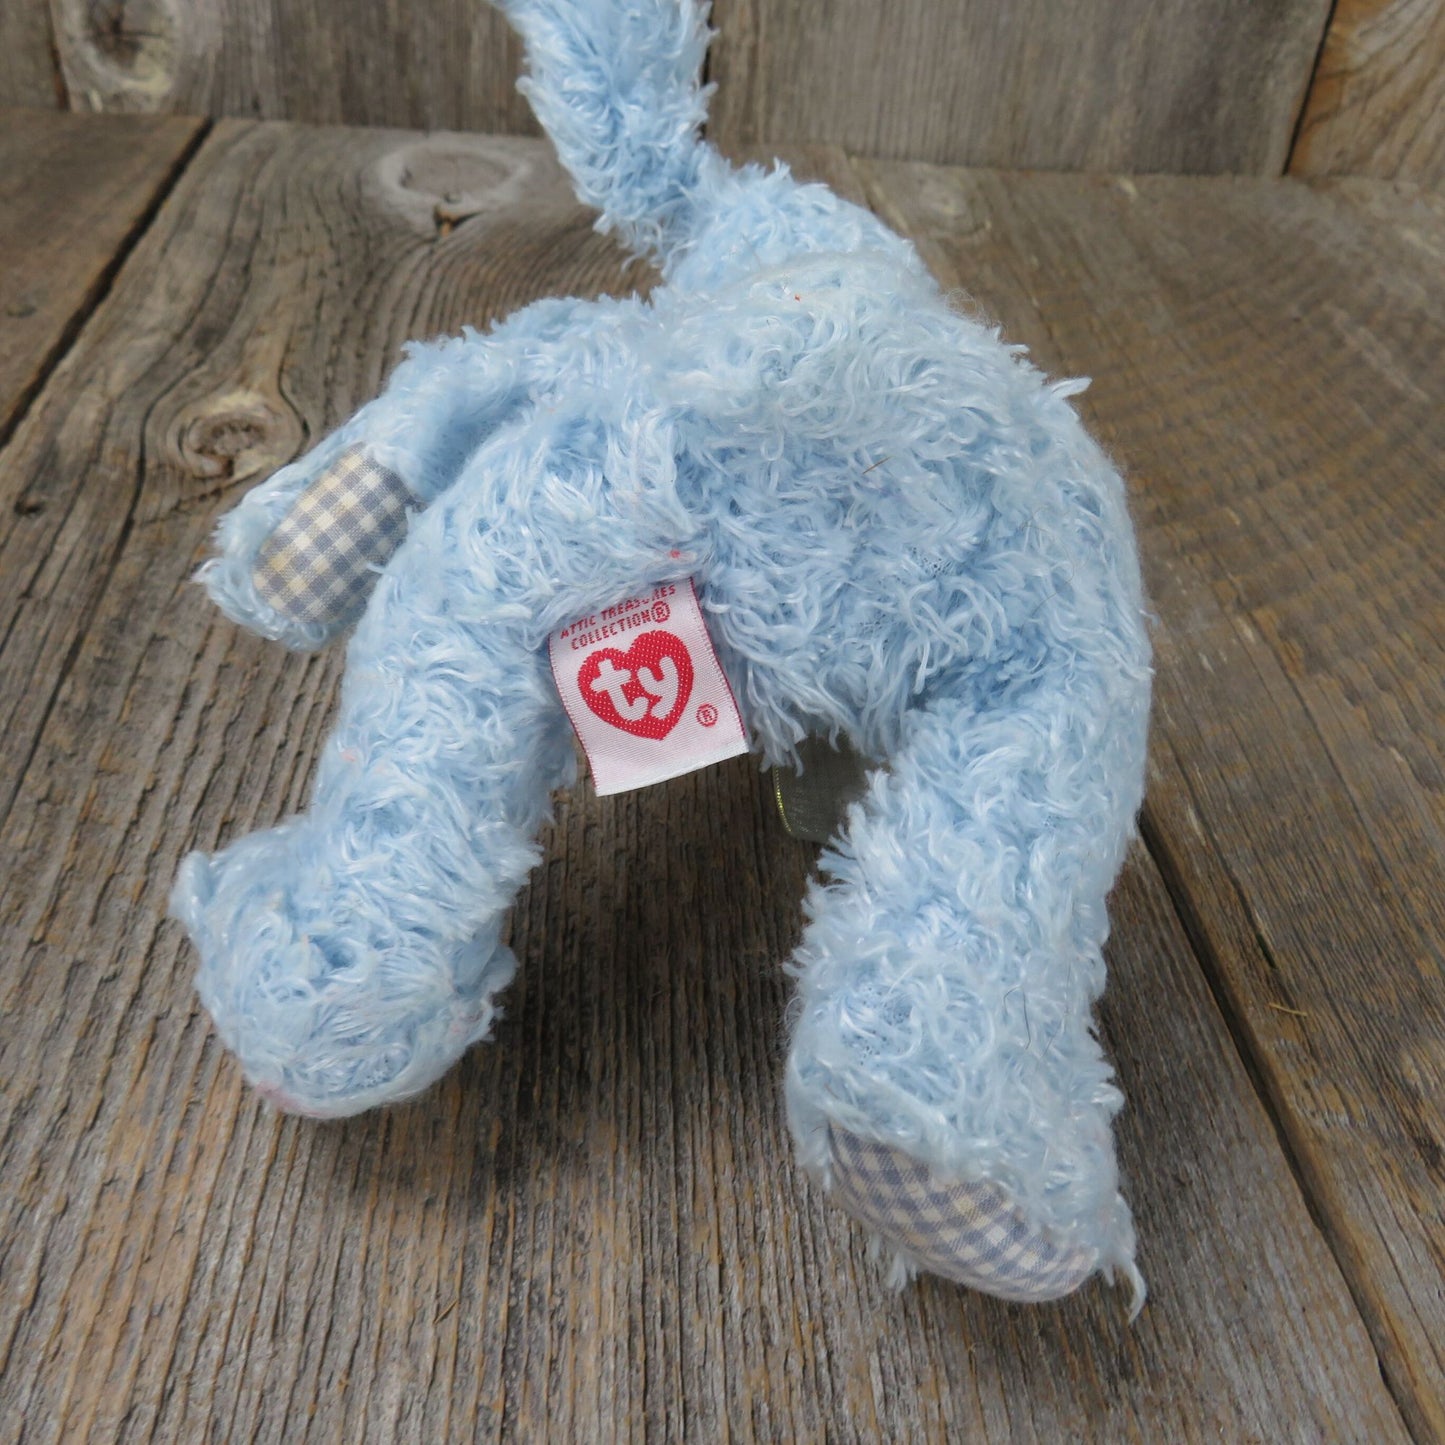 Blue Fuzzy Bunny Plush Ty Attic Treasures Rabbit 2000 Gingham Beanie Baby Stuffed Animal